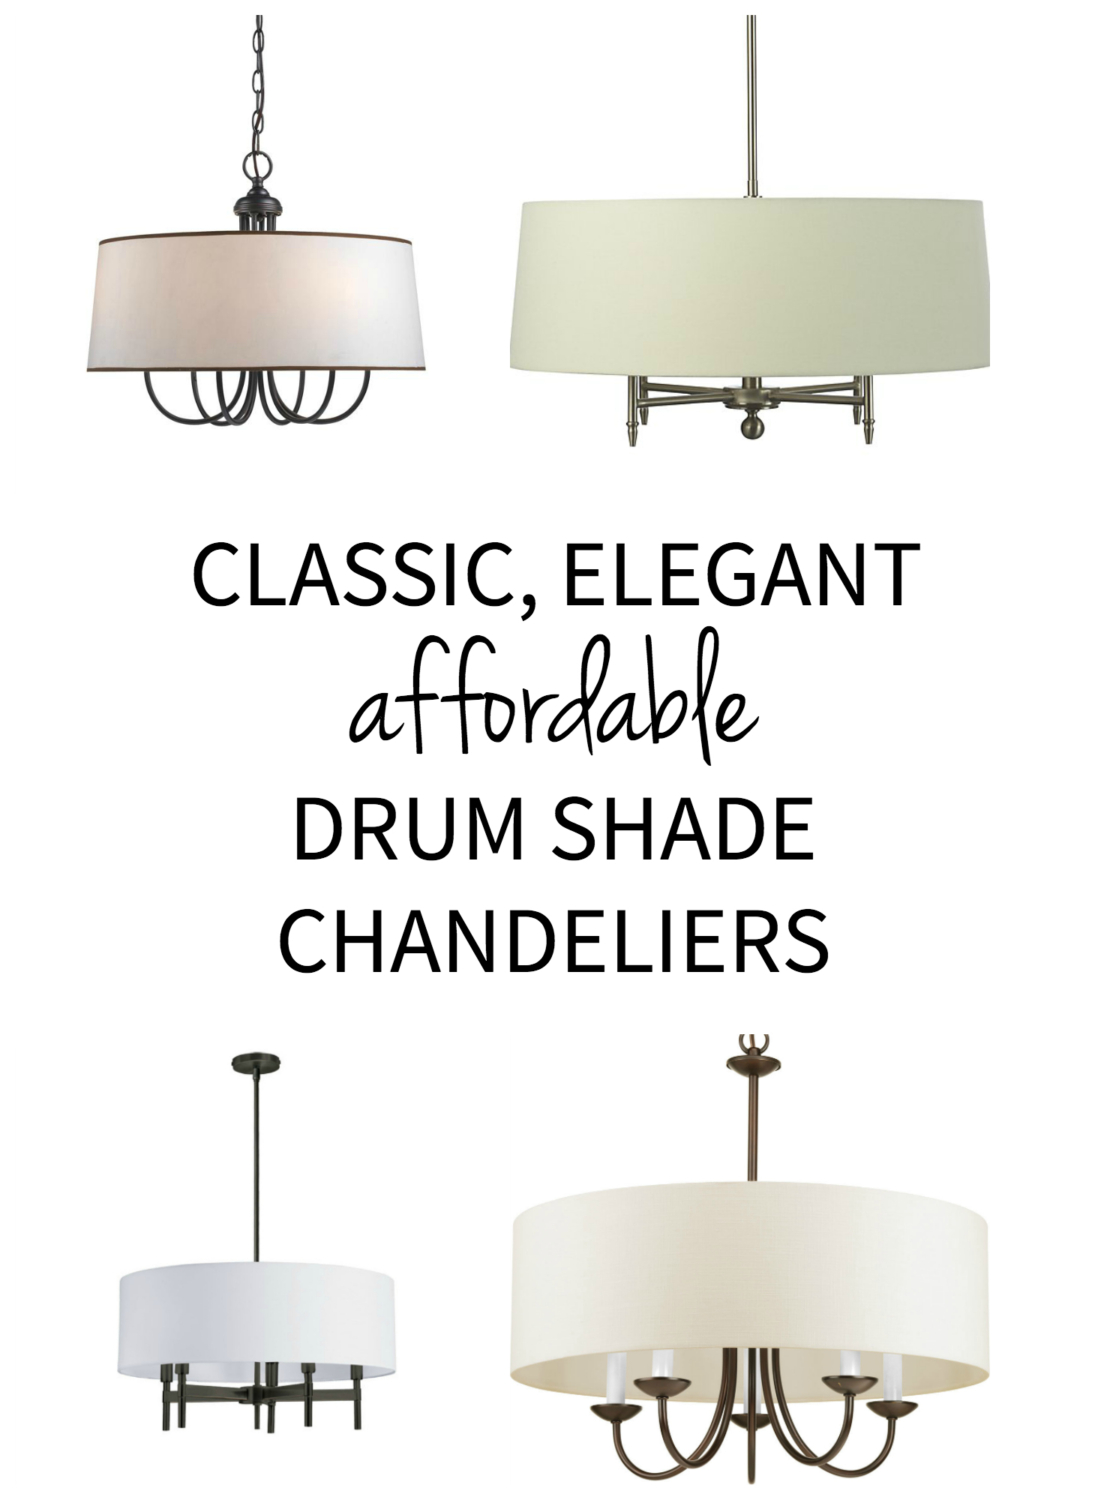 Classic, elegant lighting - drum shade chandelier pendants priced on a budget!